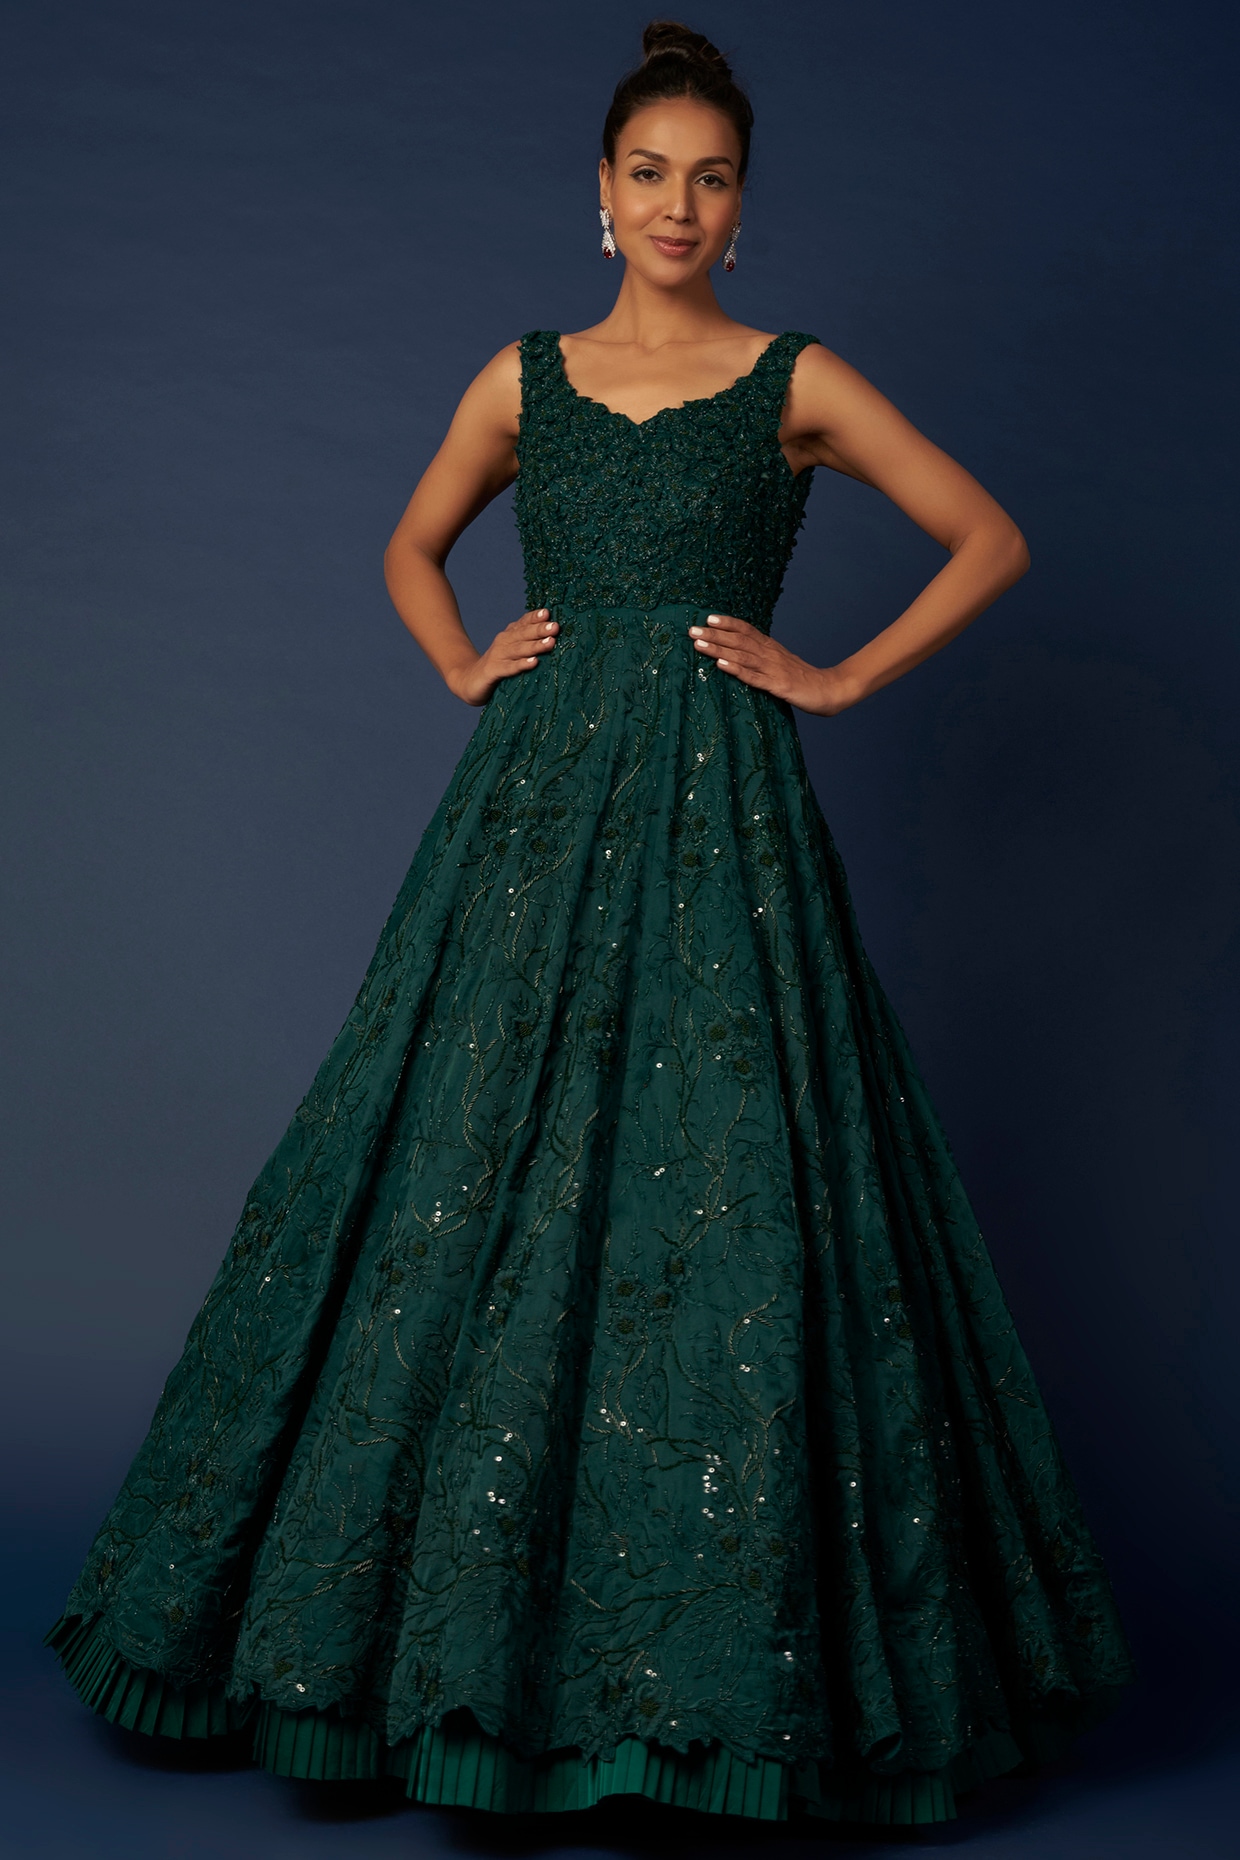 Green dress | Simple frocks, Green dress, Long gown design